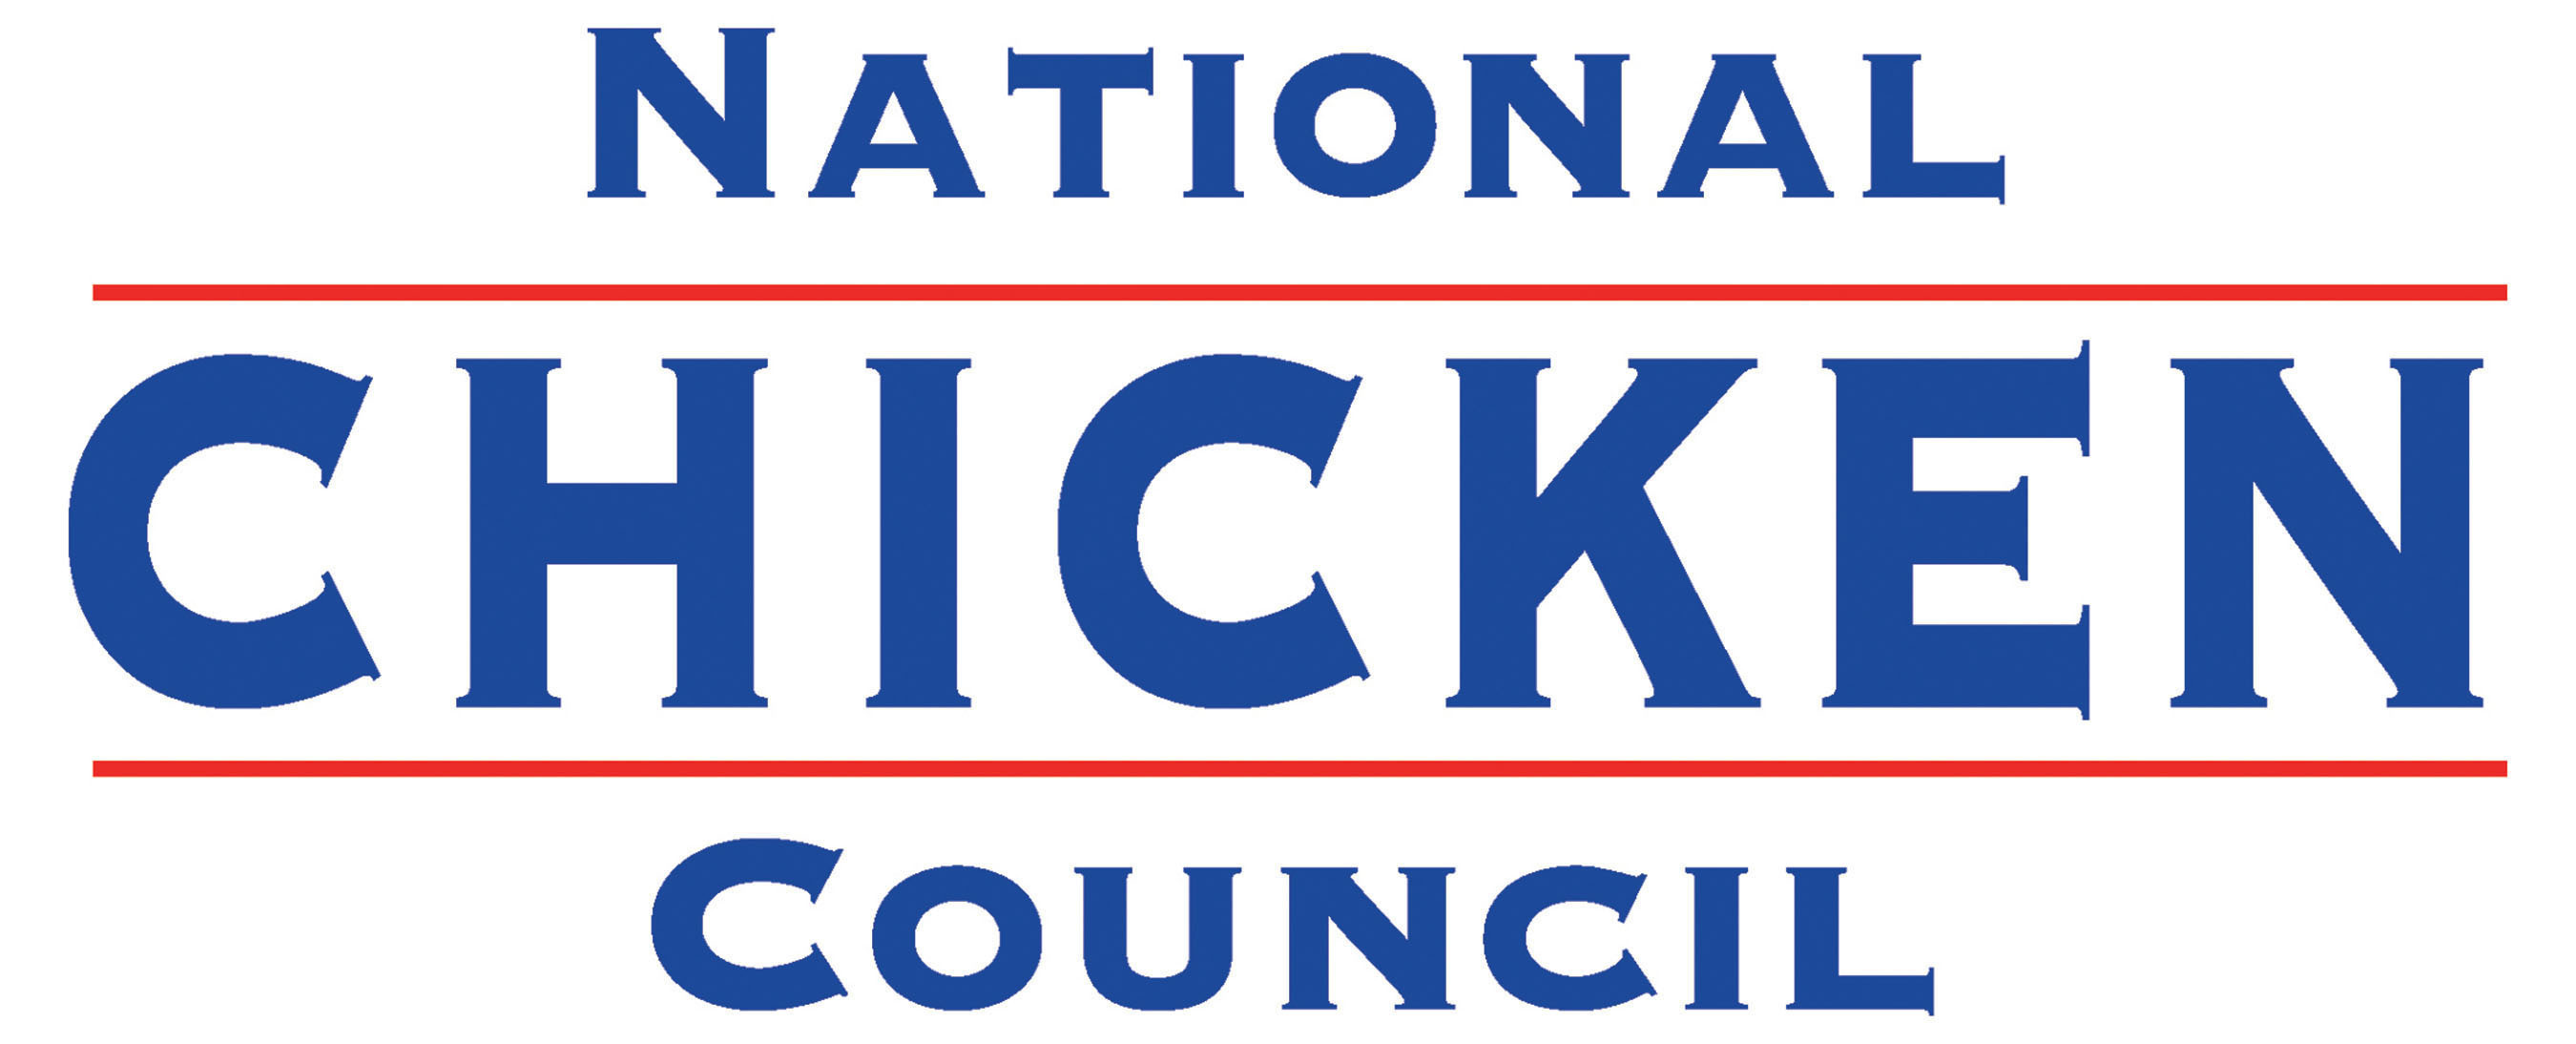 National Chicken Council Logo. (PRNewsFoto/National Chicken Council) (PRNewsFoto/NATIONAL CHICKEN COUNCIL)